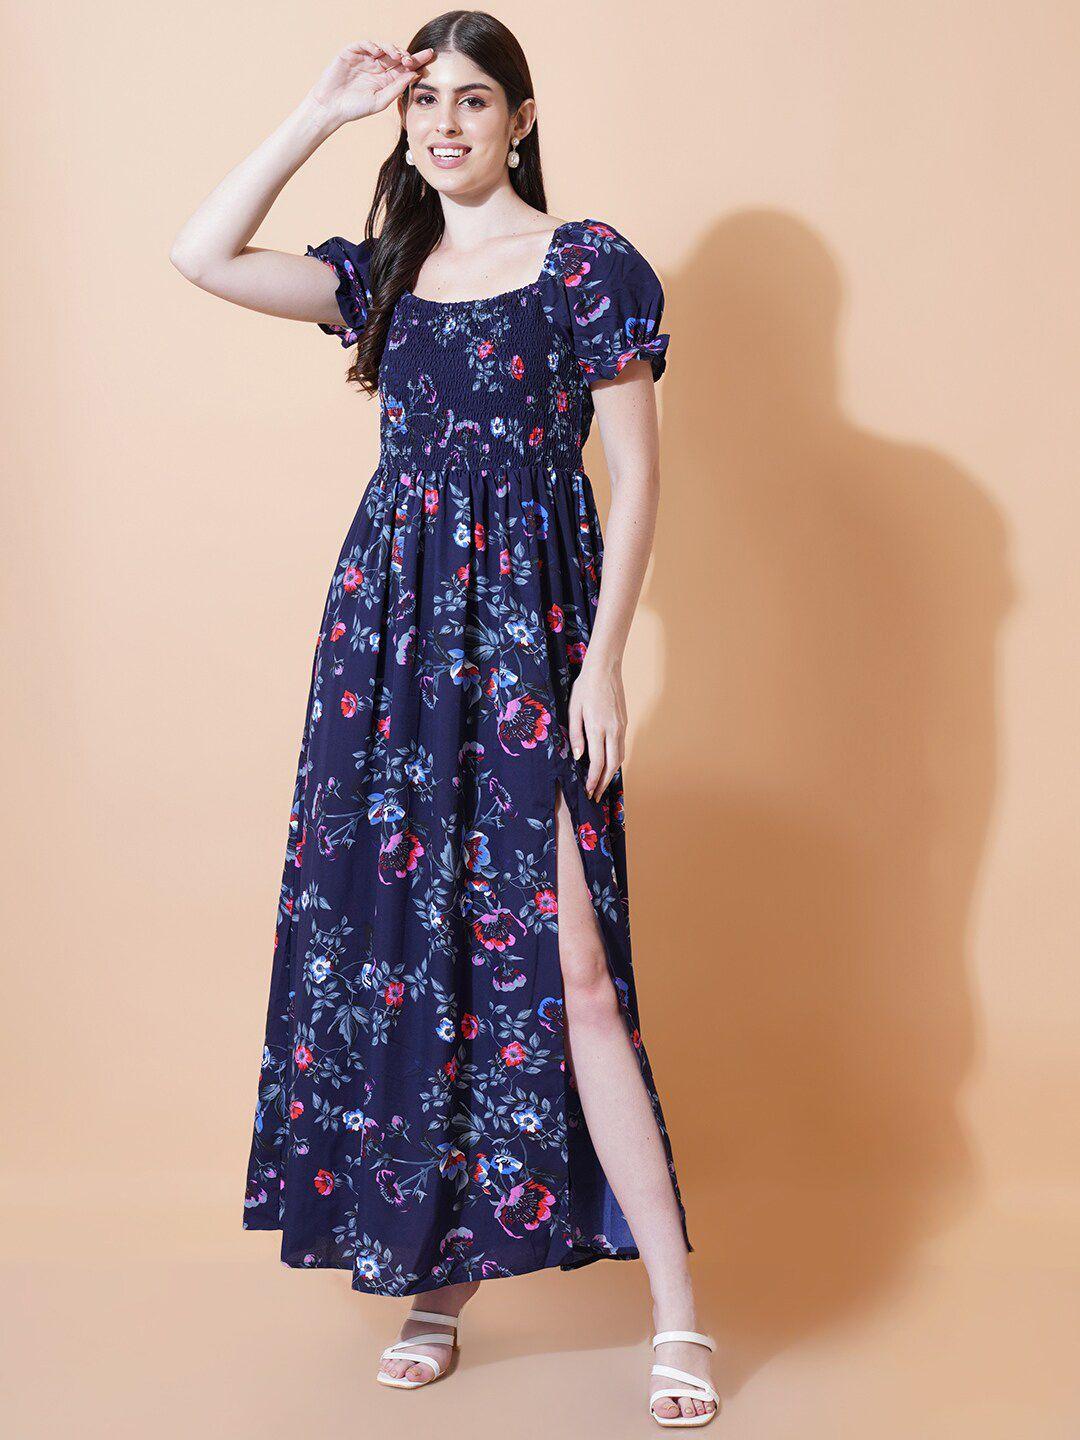 ix impression navy blue floral print fit & flare dress